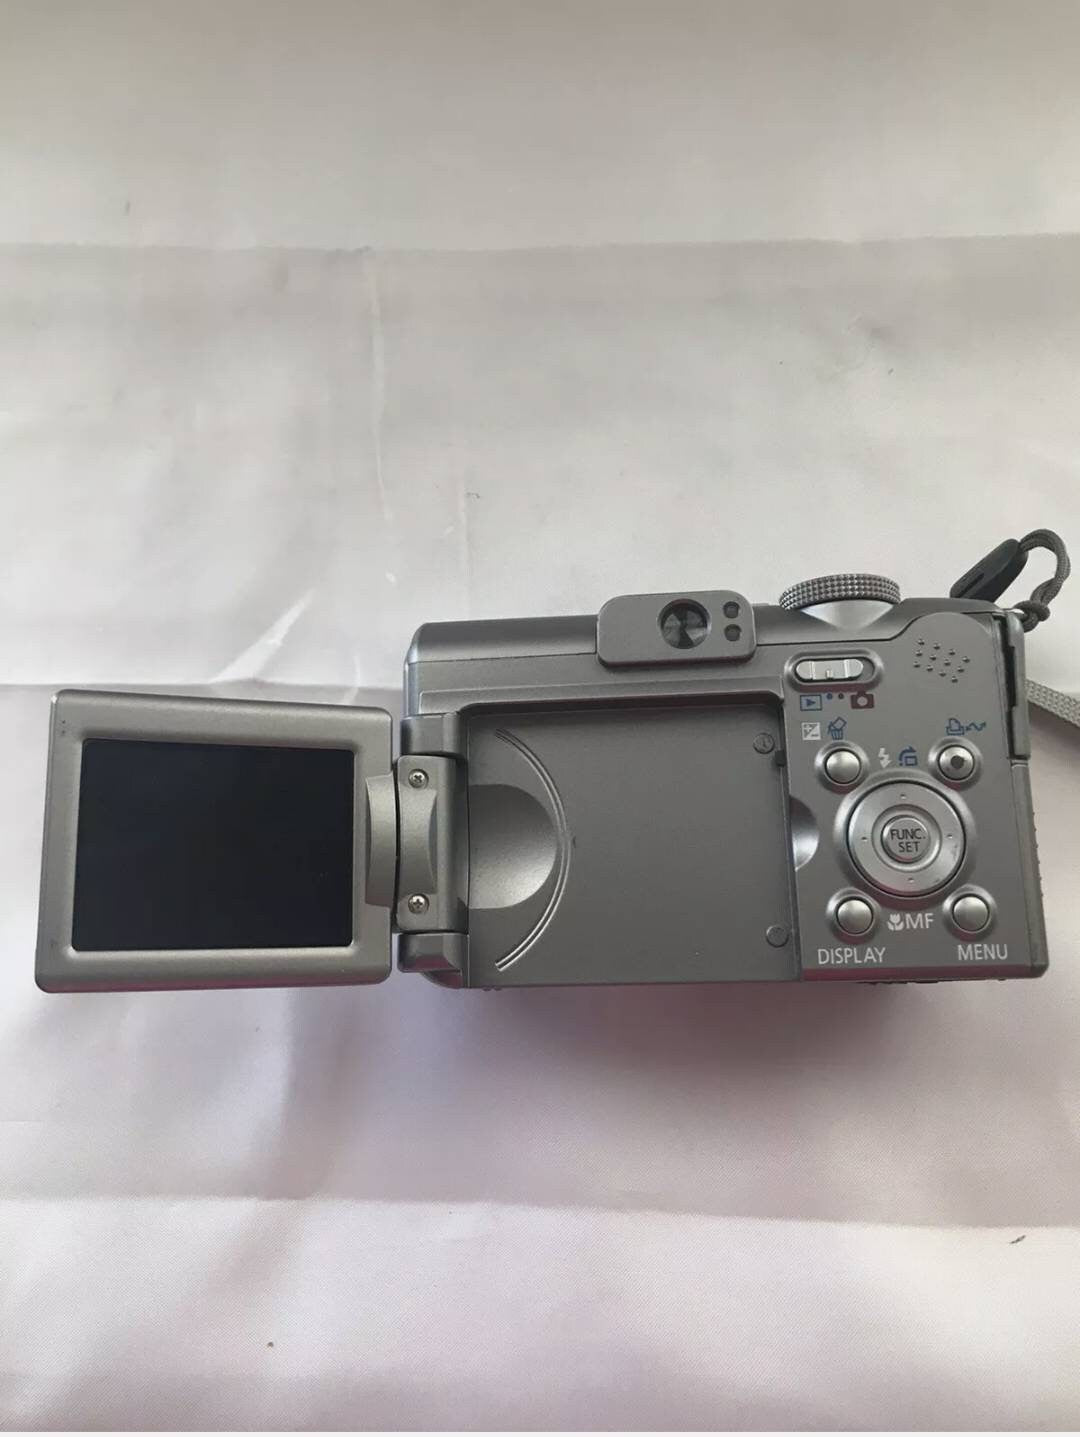 Canon Powershot A620 Digital Camera Silver